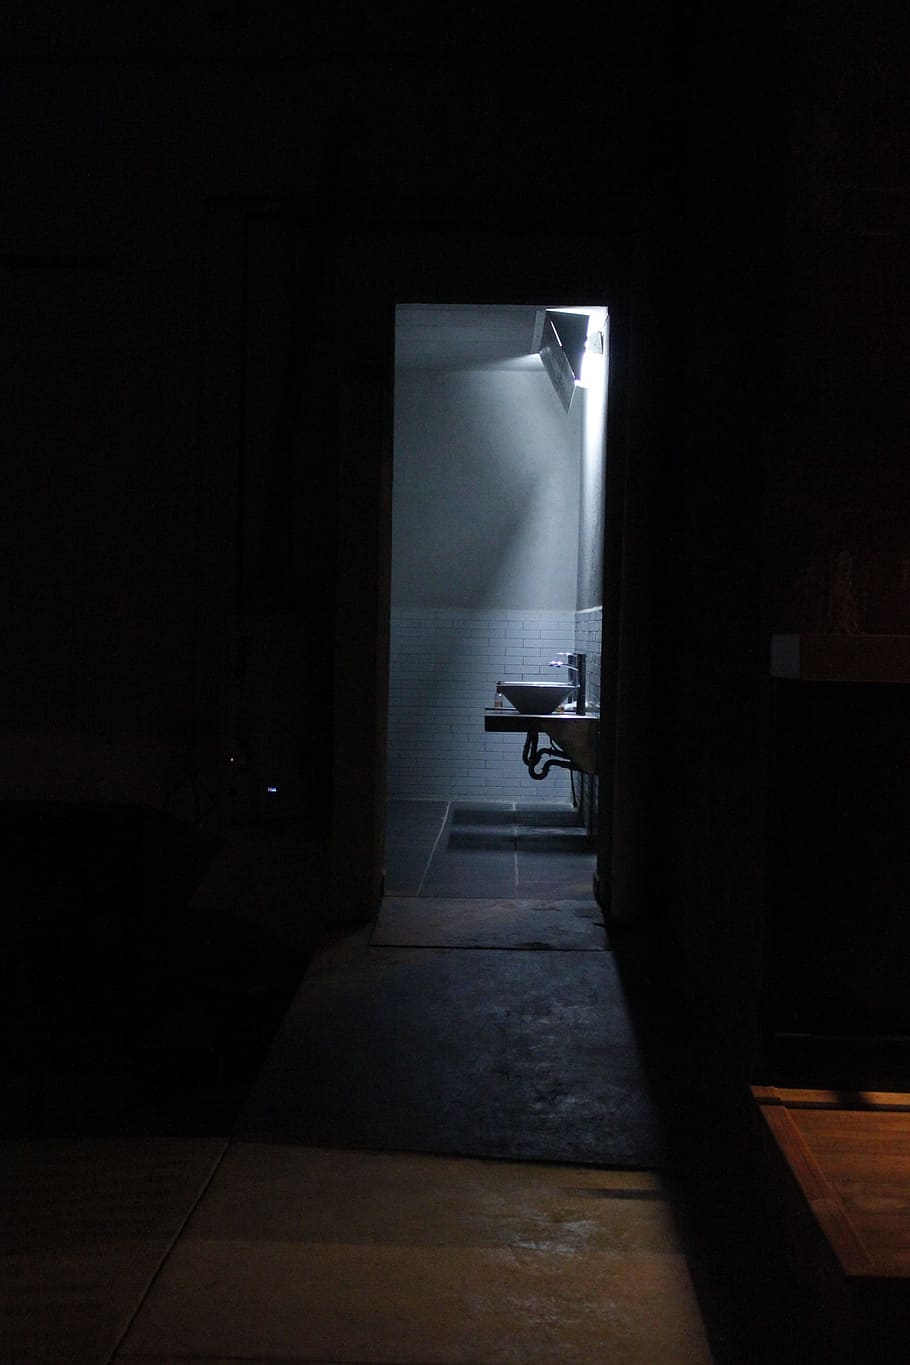 Bathroom, Light, Contrast, Mexico, light, contrast, manufactures, terror, fear, indoors, dark